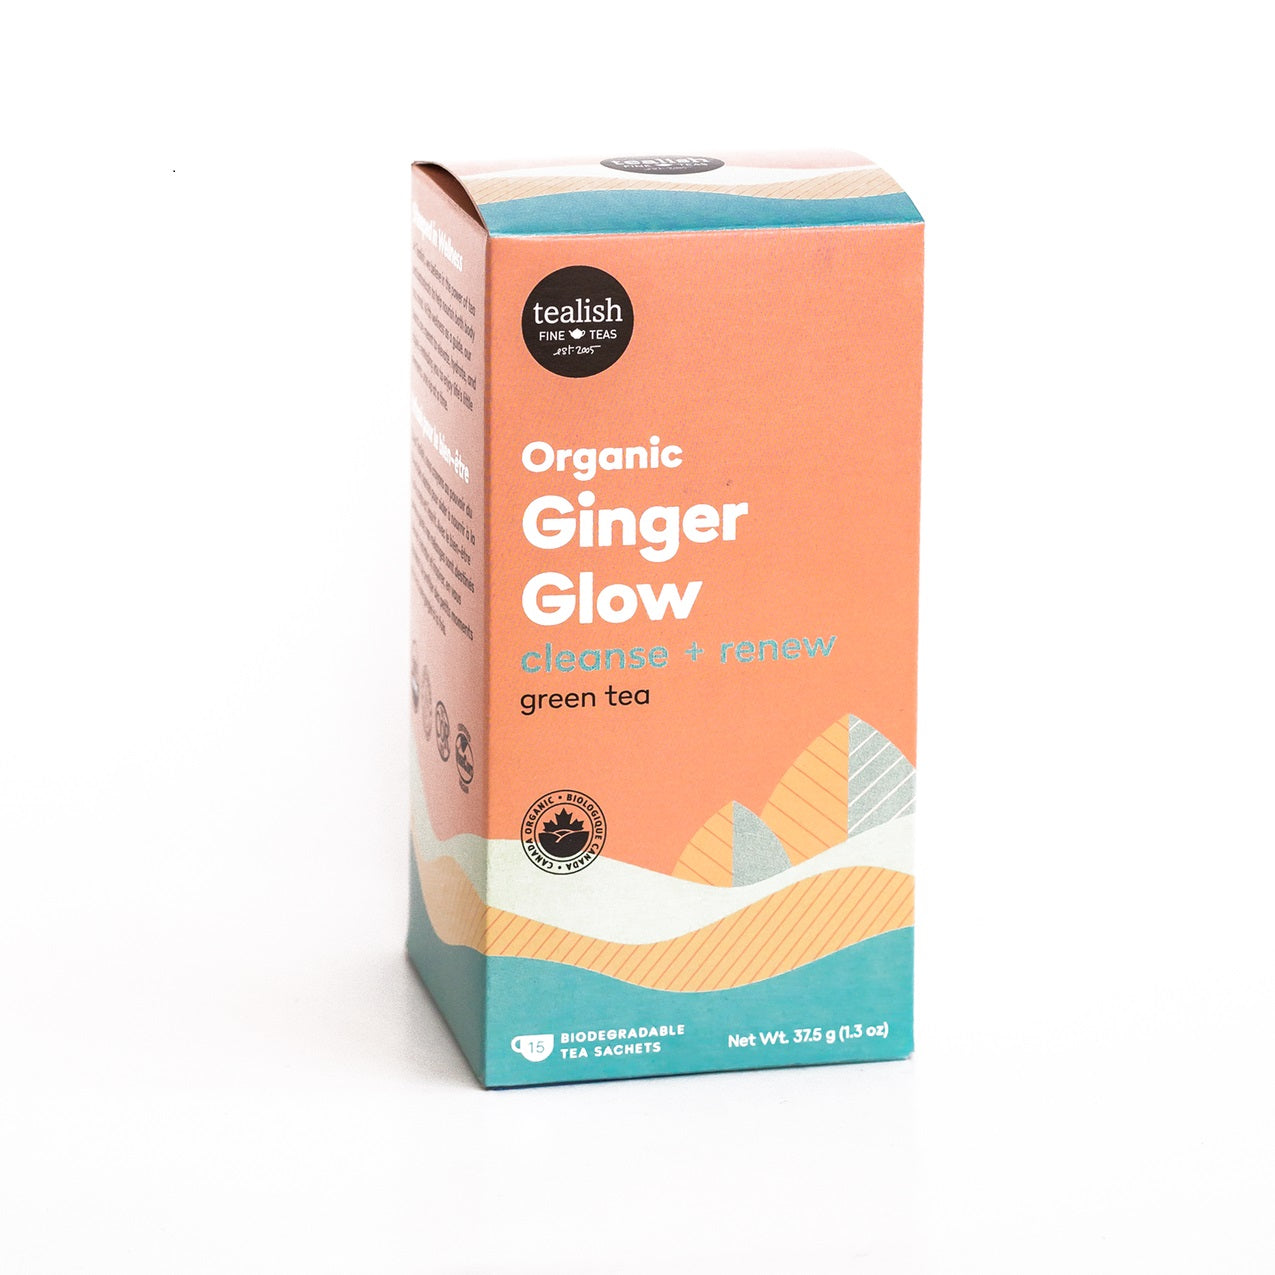 Ginger Glow Organic Tea